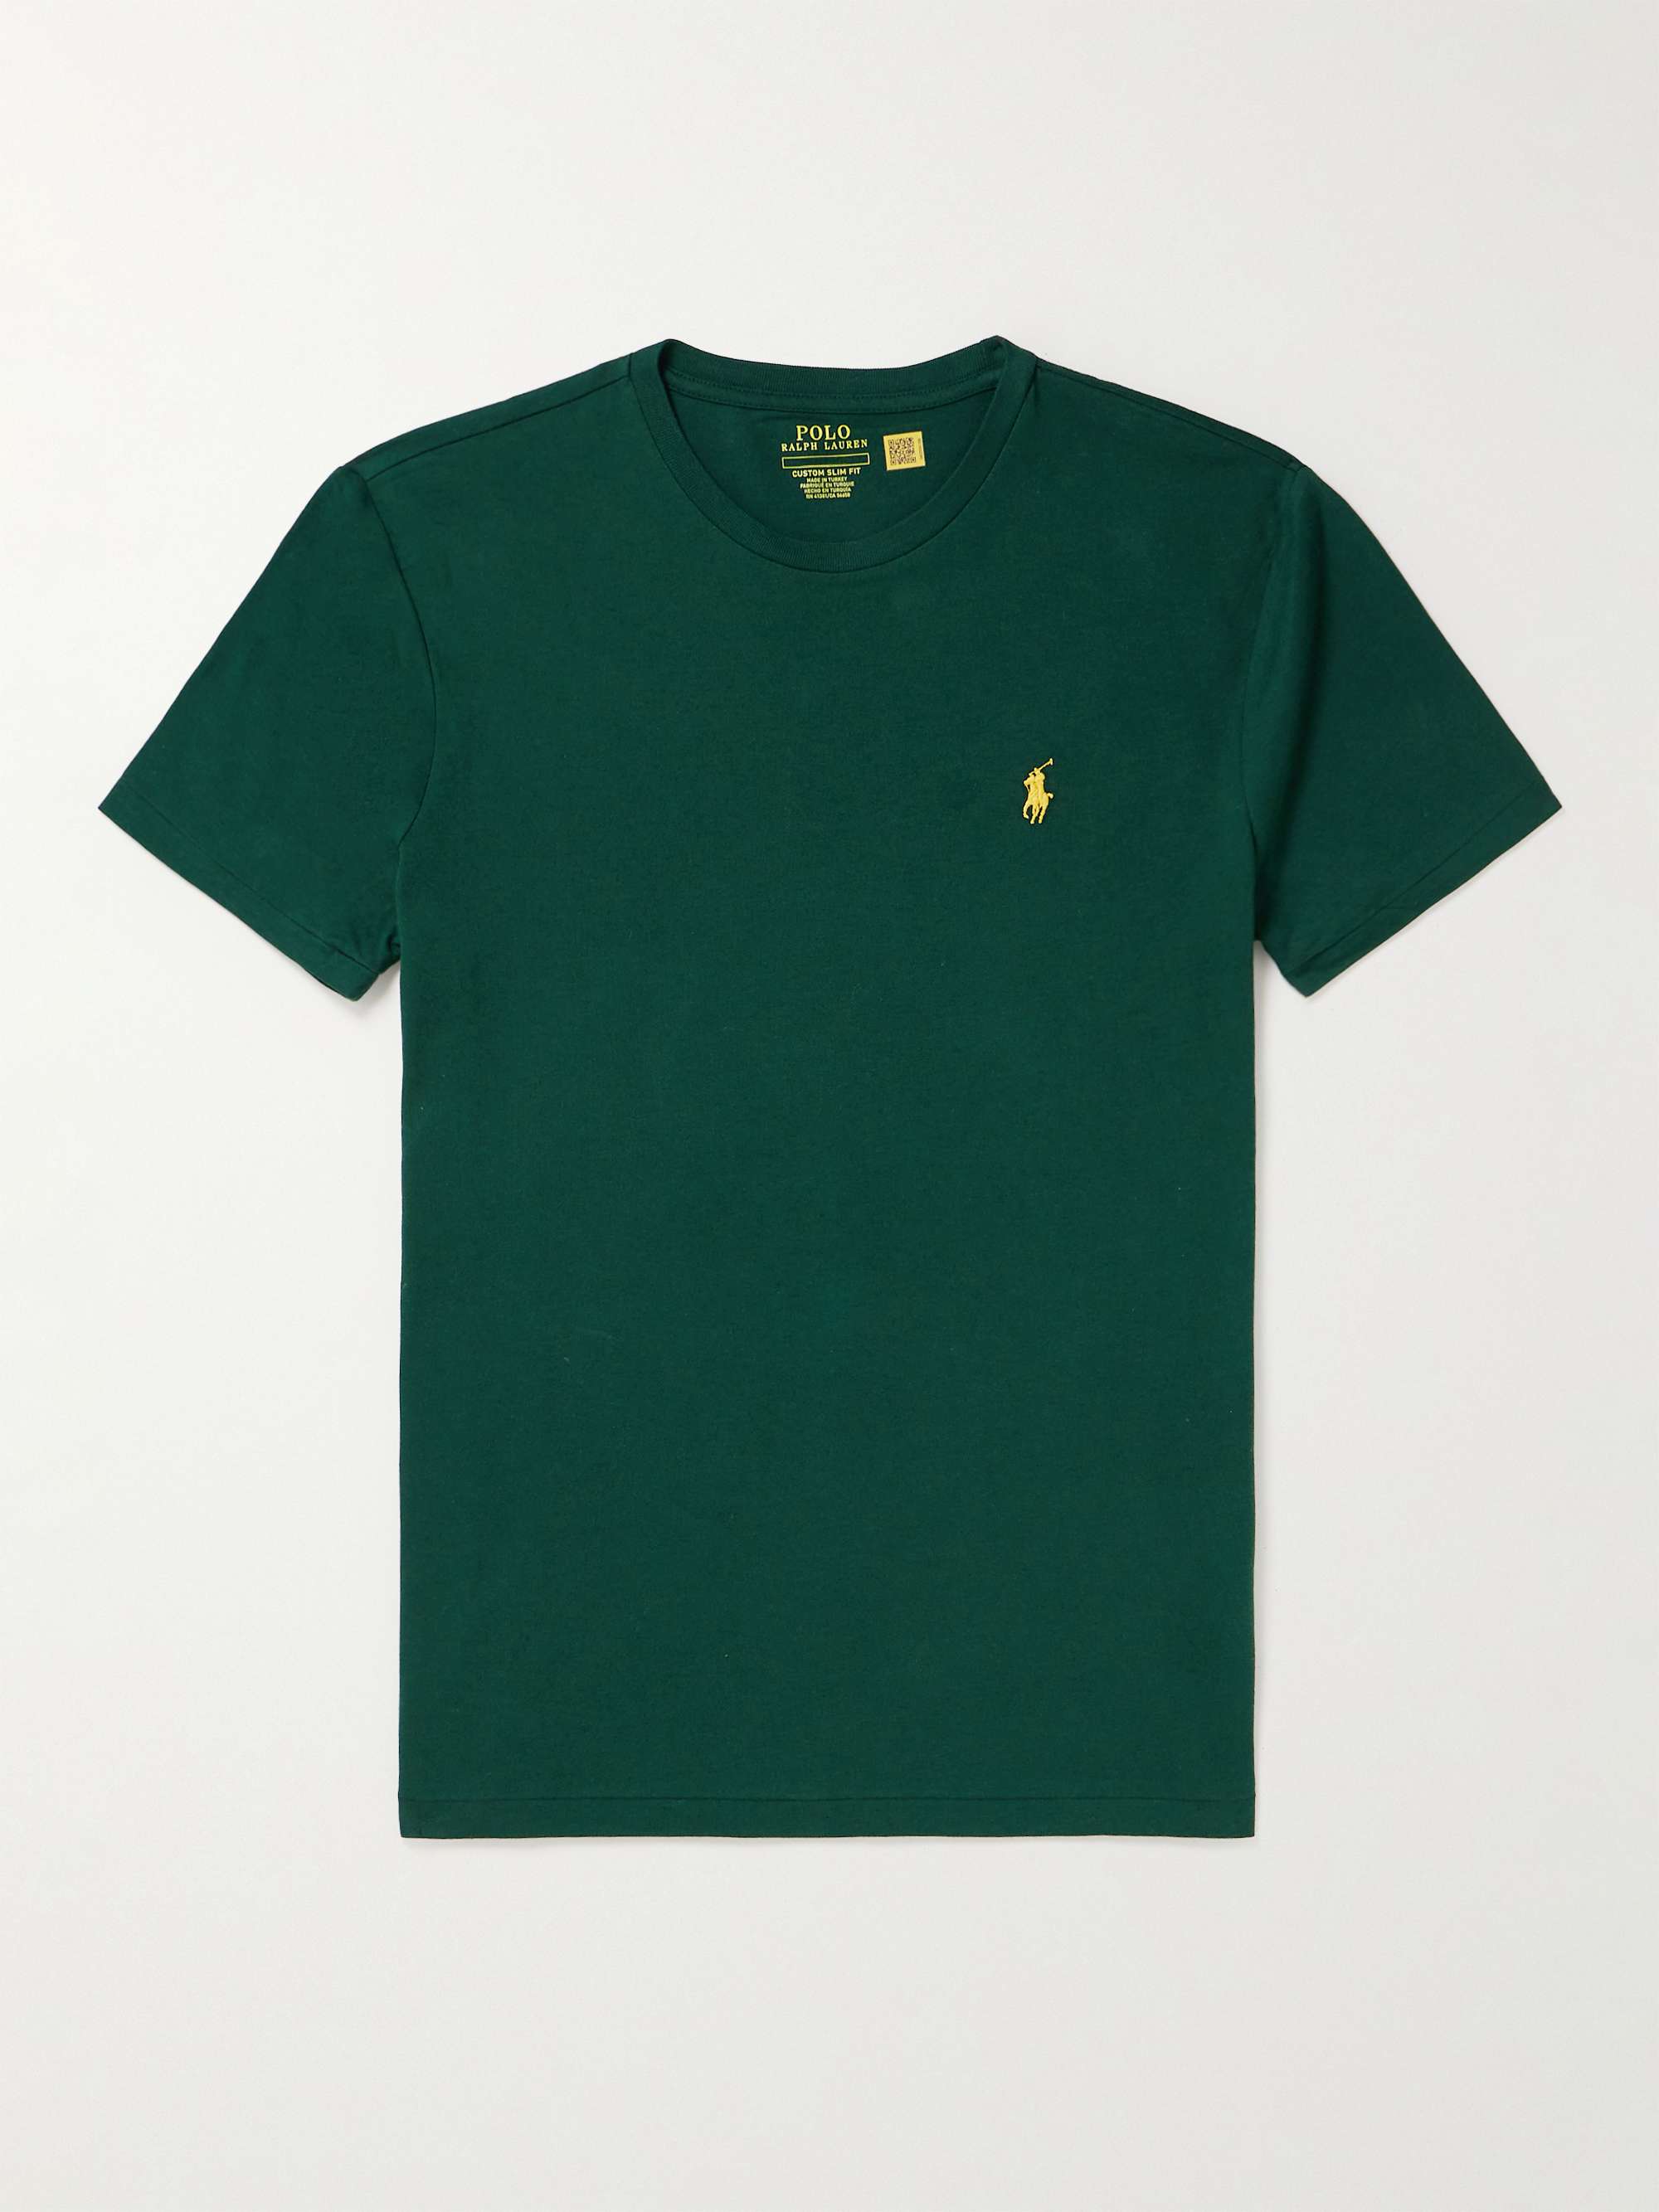 POLO RALPH LAUREN Logo-Embroidered Cotton-Jersey T-Shirt for Men